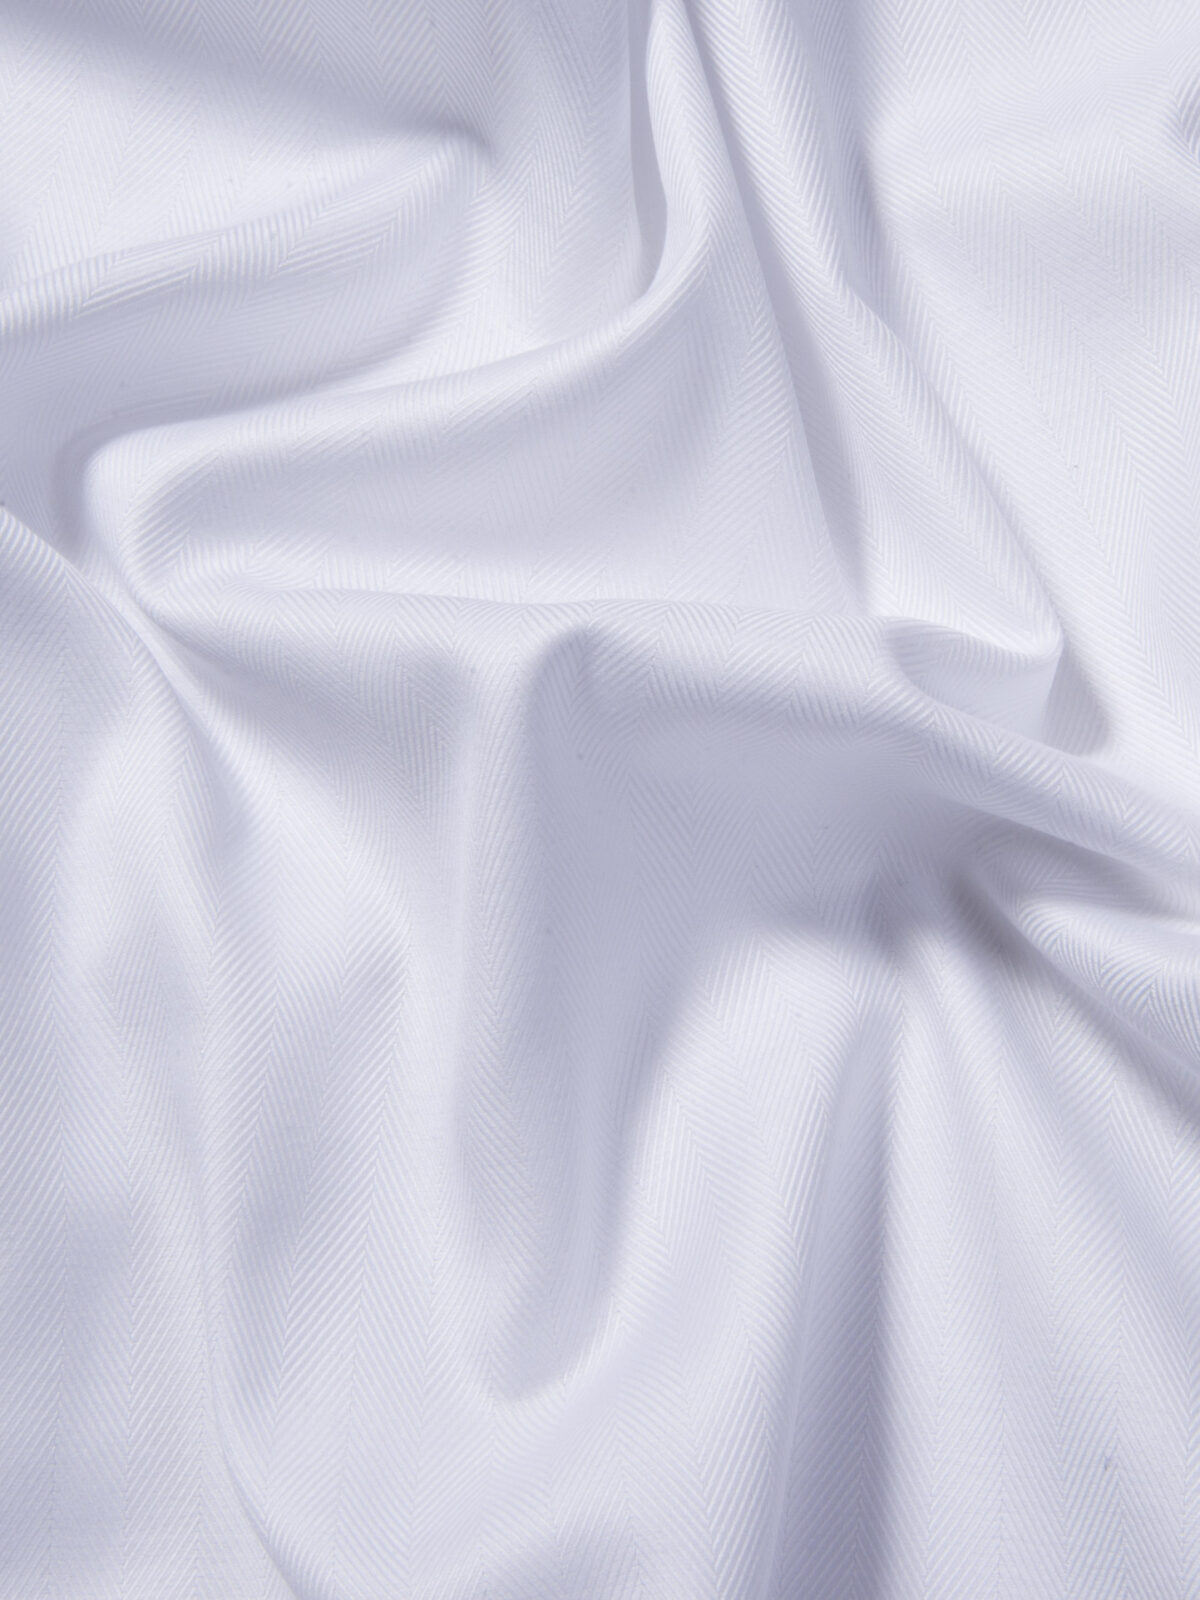 120s White Royal Herringbone Shirts by Proper Cloth